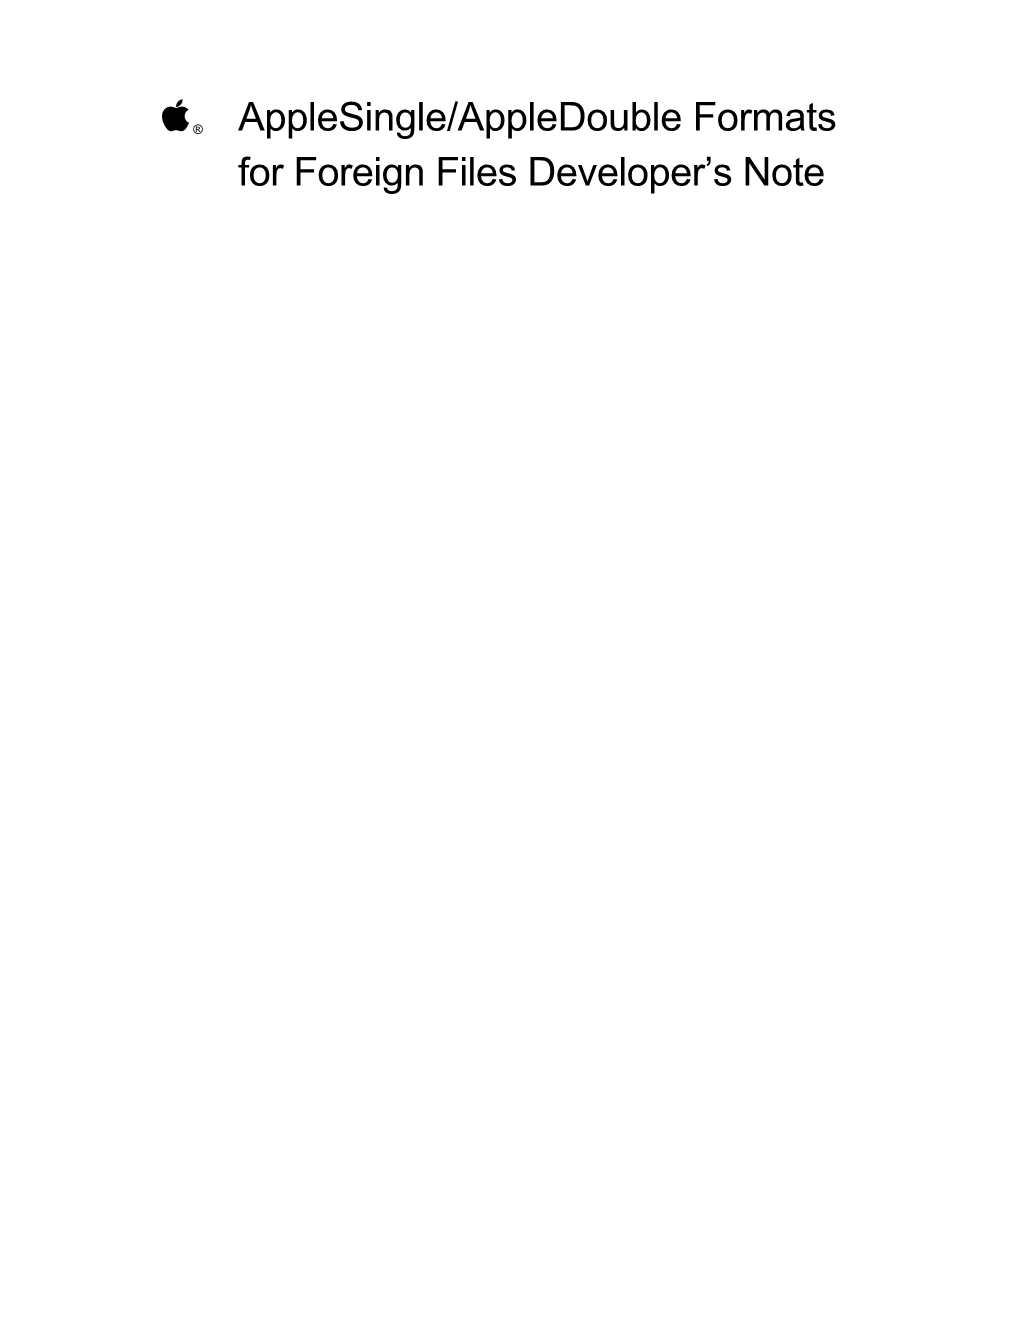 Applesingle/Appledouble Formats for Foreign Files Developer's Note